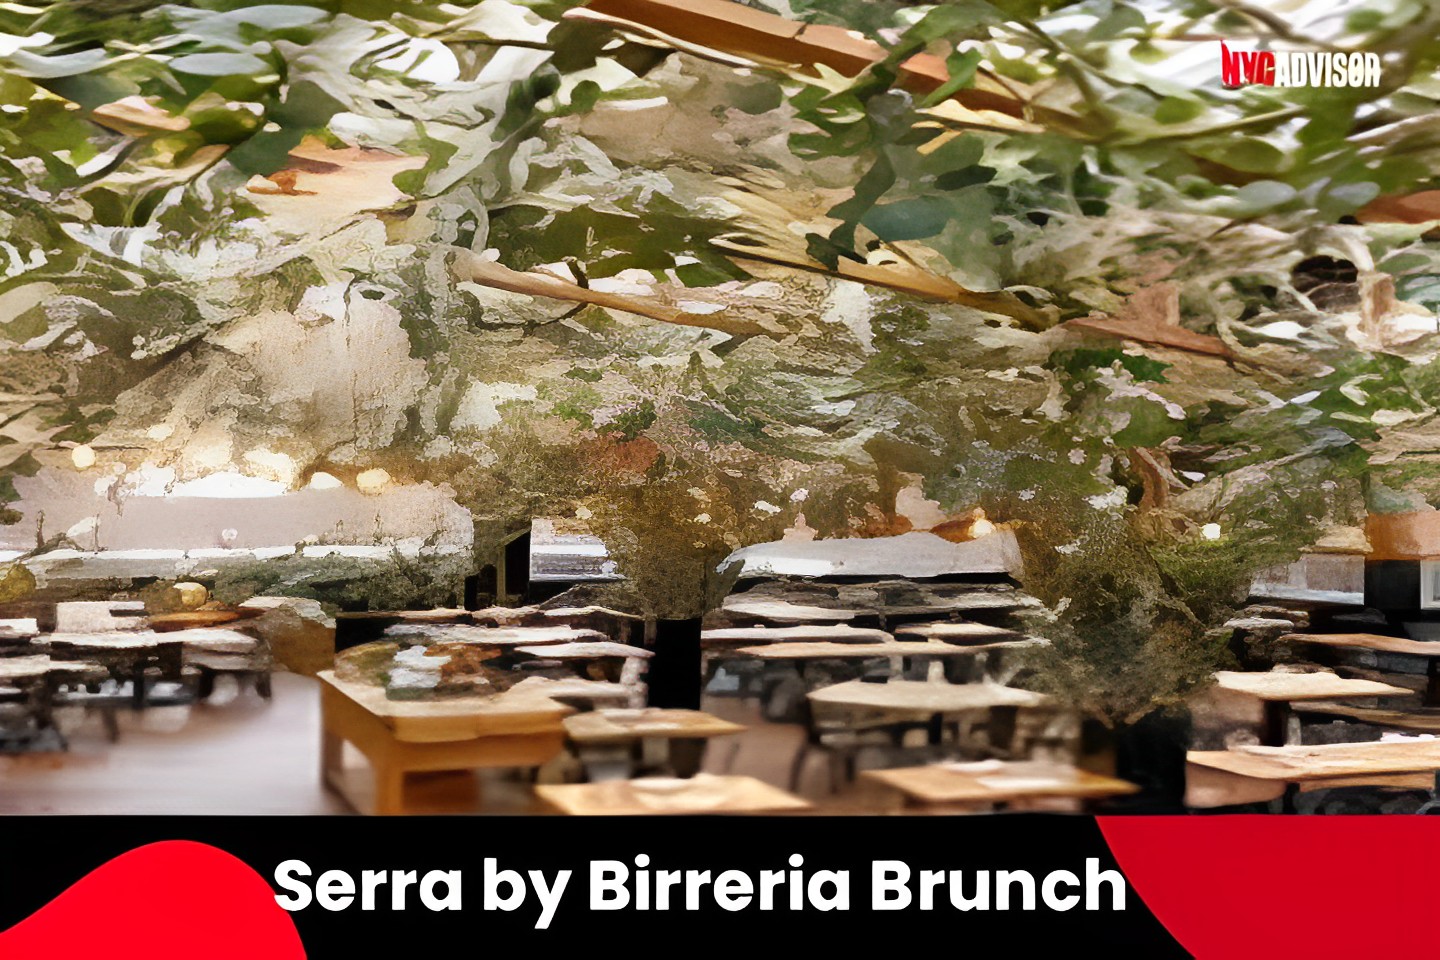 The Serra by Birreria Brunch in NYC